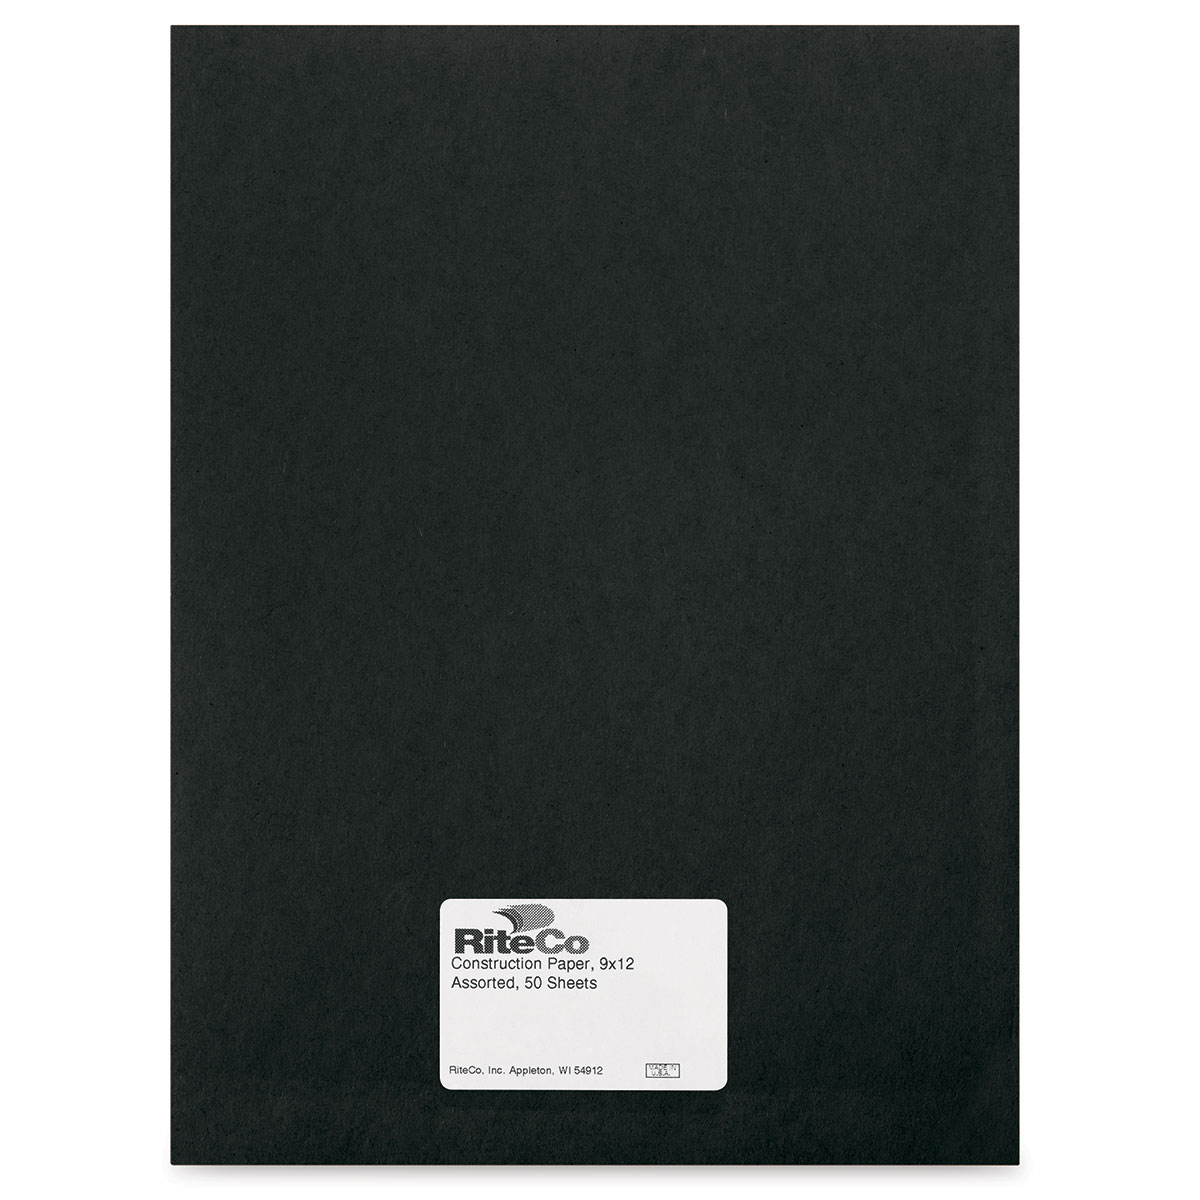 Riteco 24106 Construction Paper by Black, 9 x 12